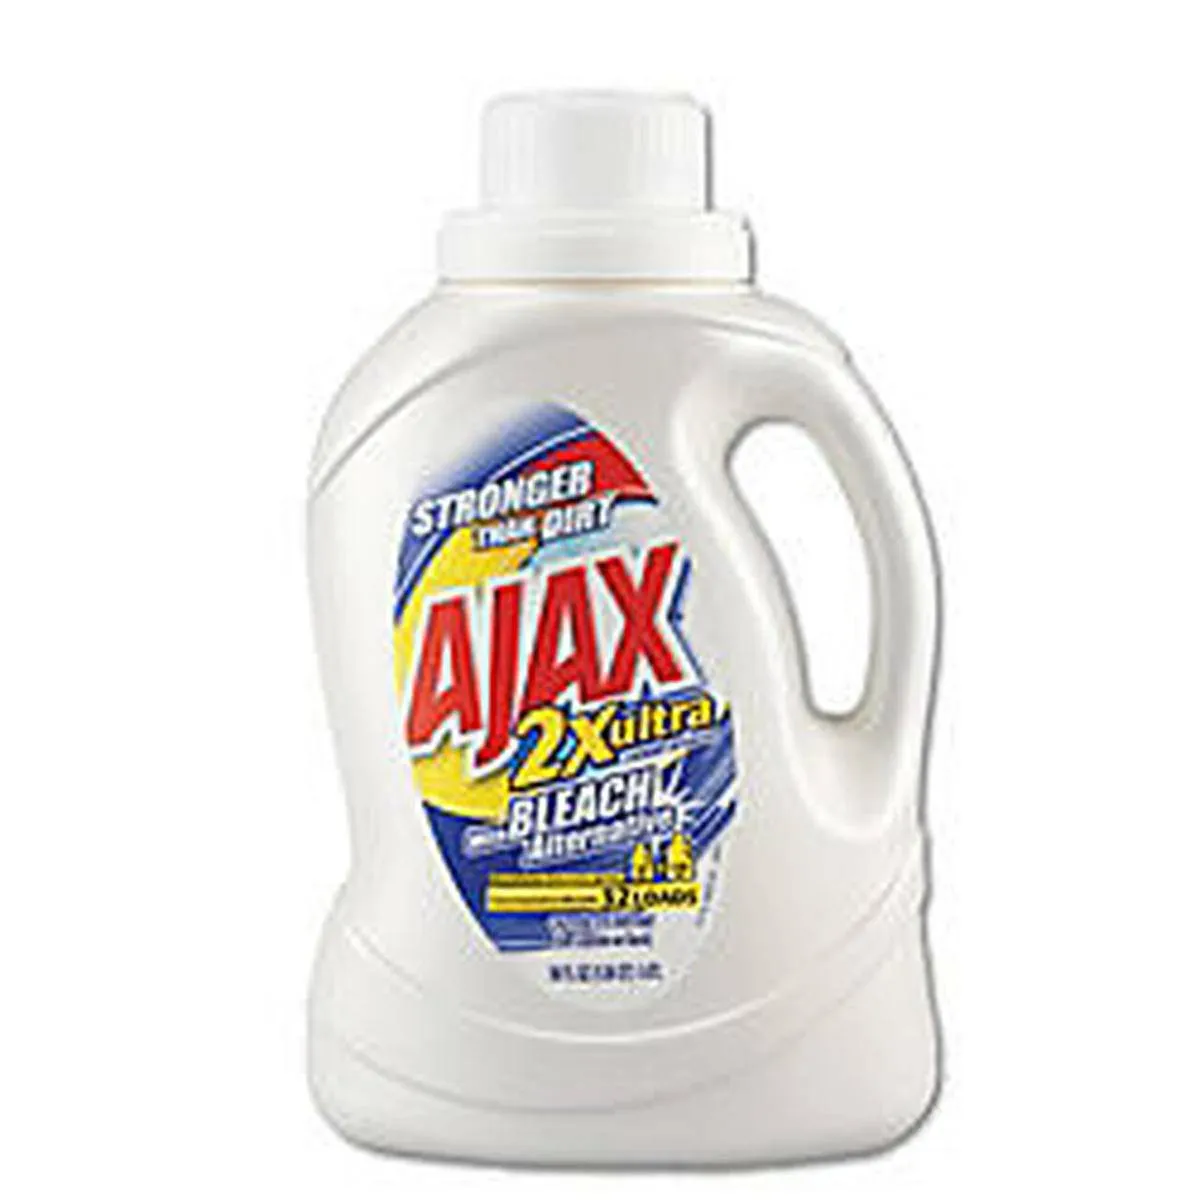 ajax 2x ultra with bleach alternative